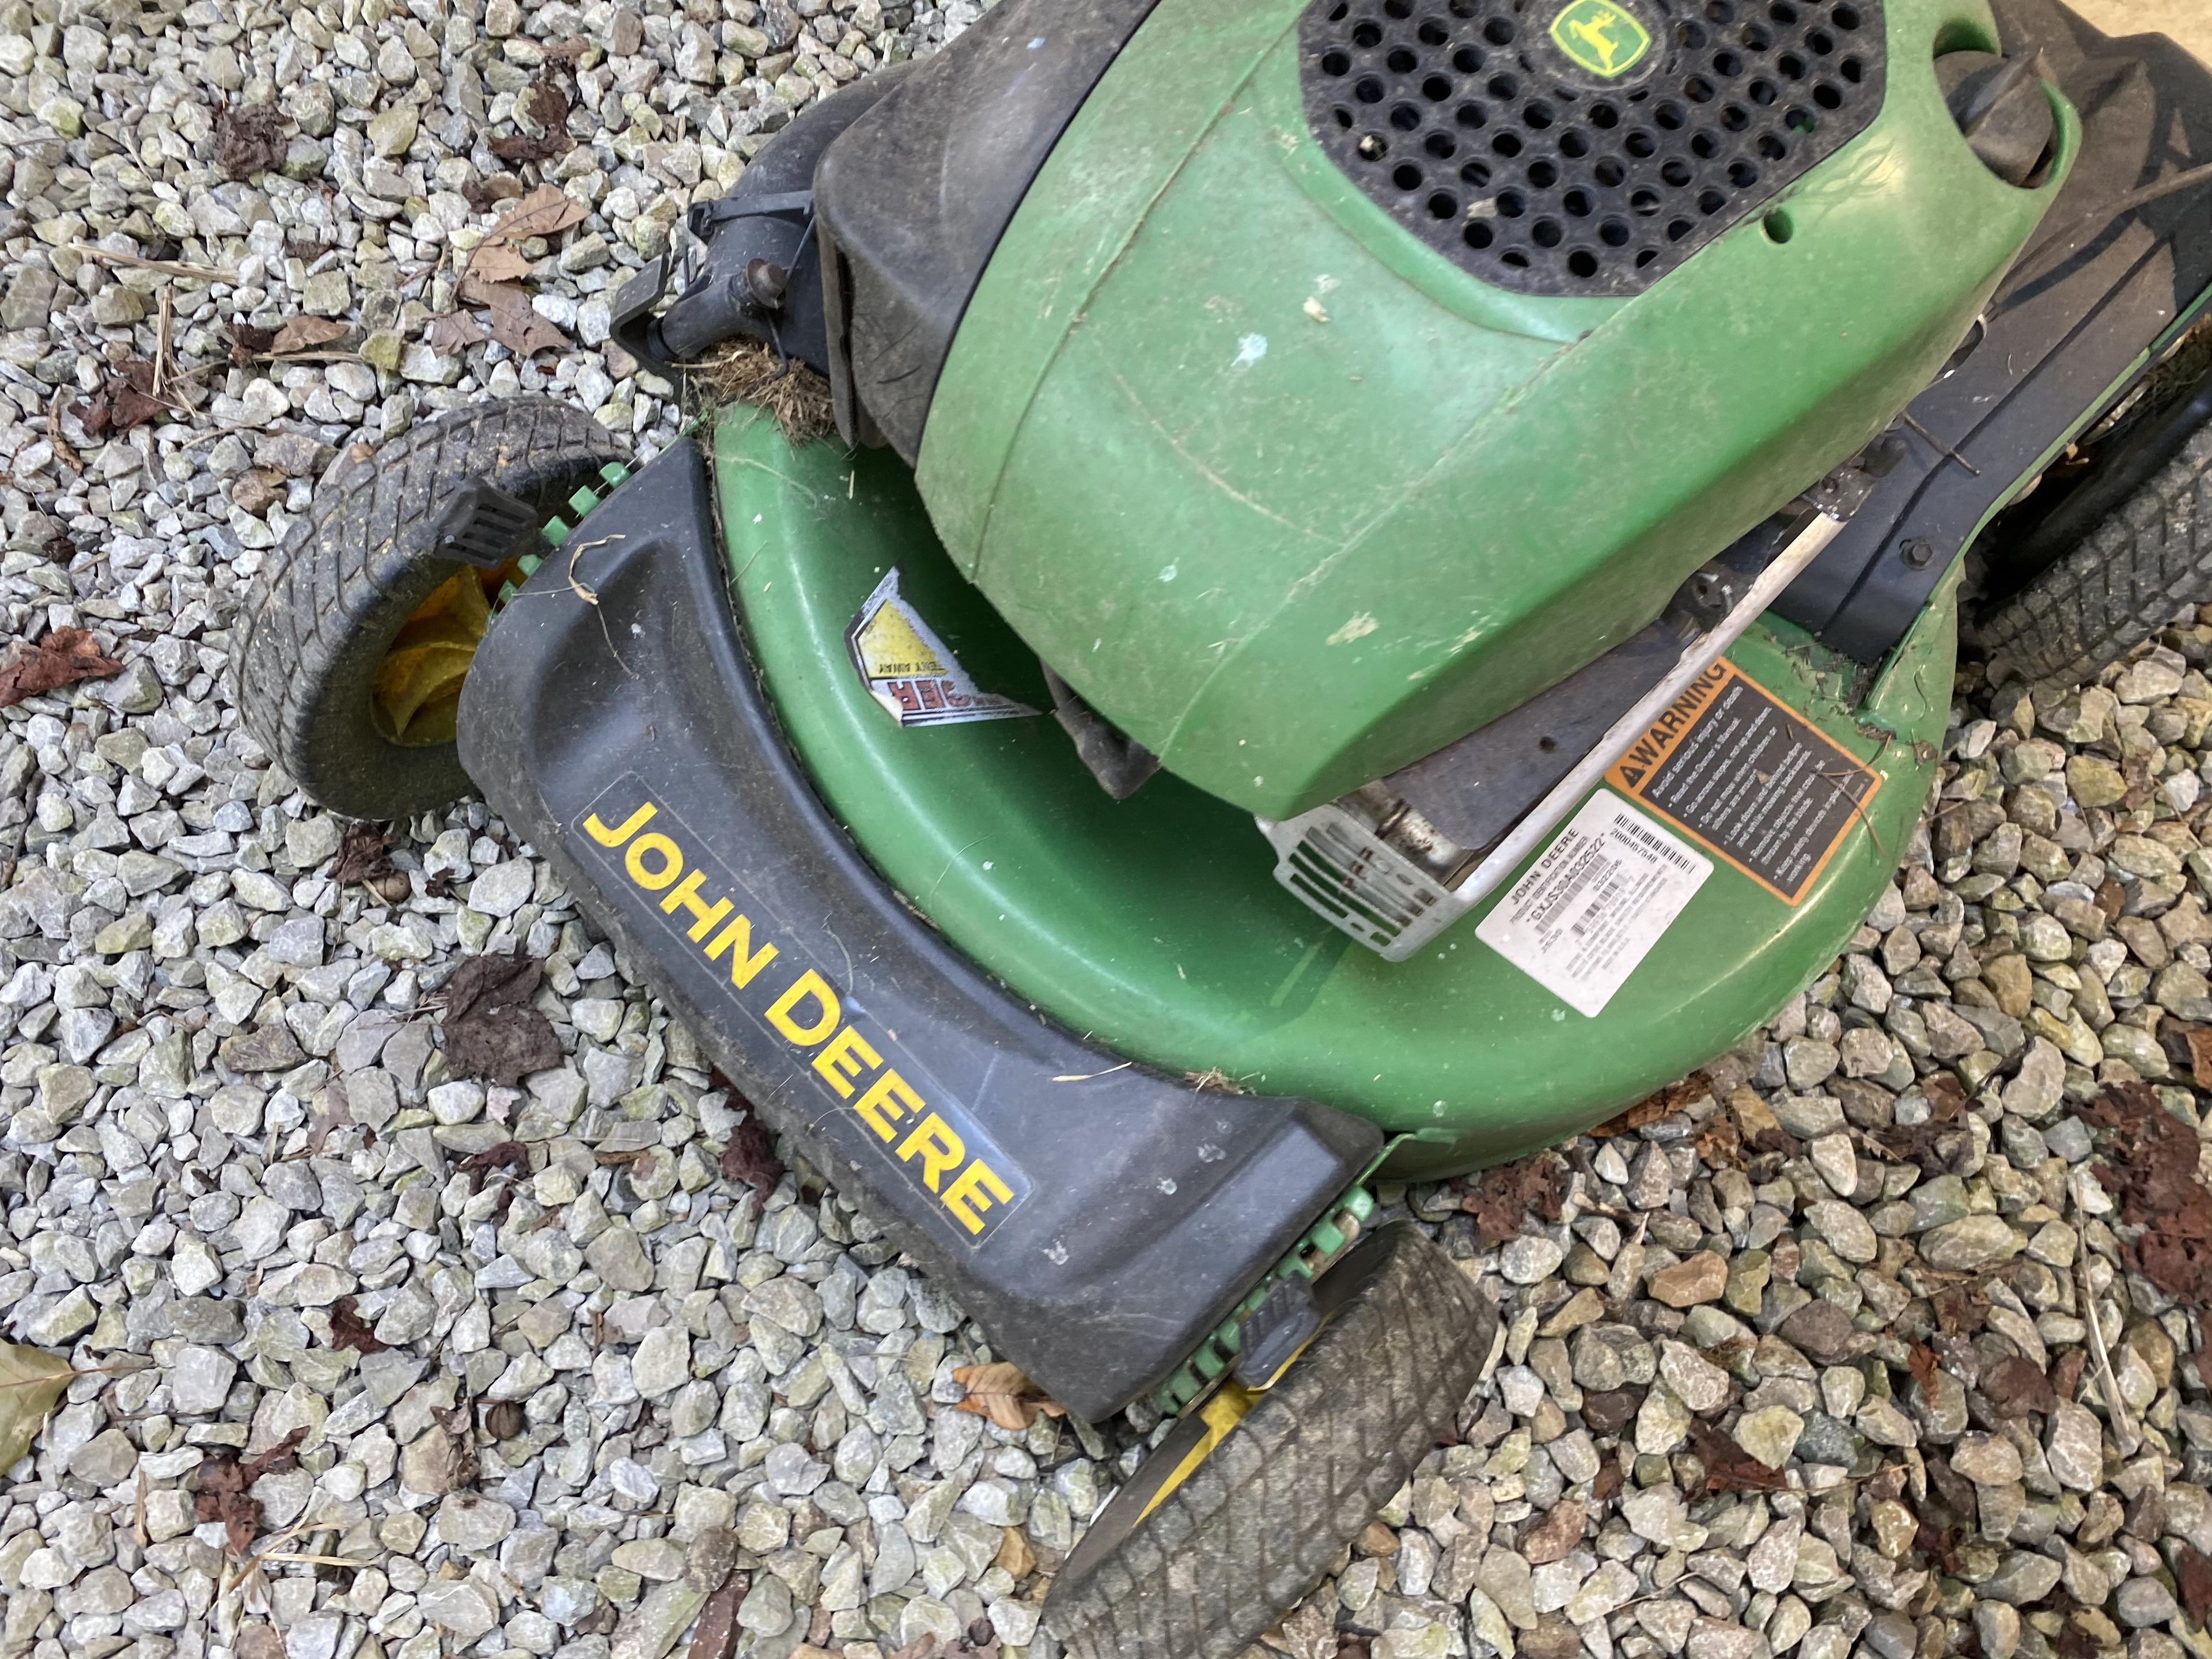 John Deere Push Lawn Mower